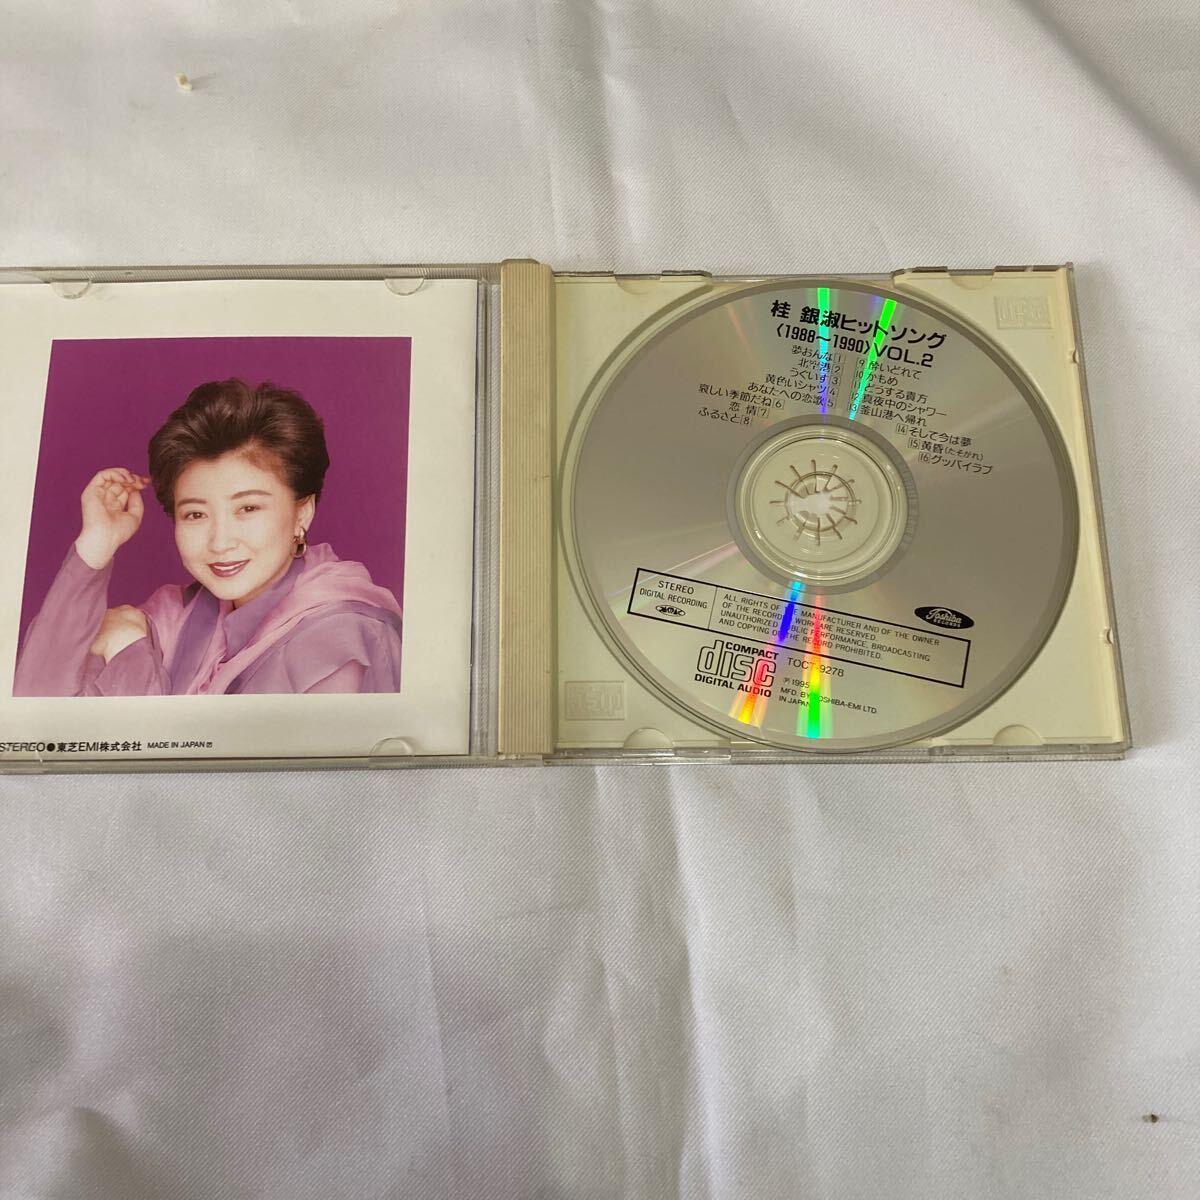  katsura tree silver .CD album katsura tree silver . hit song1985-1987